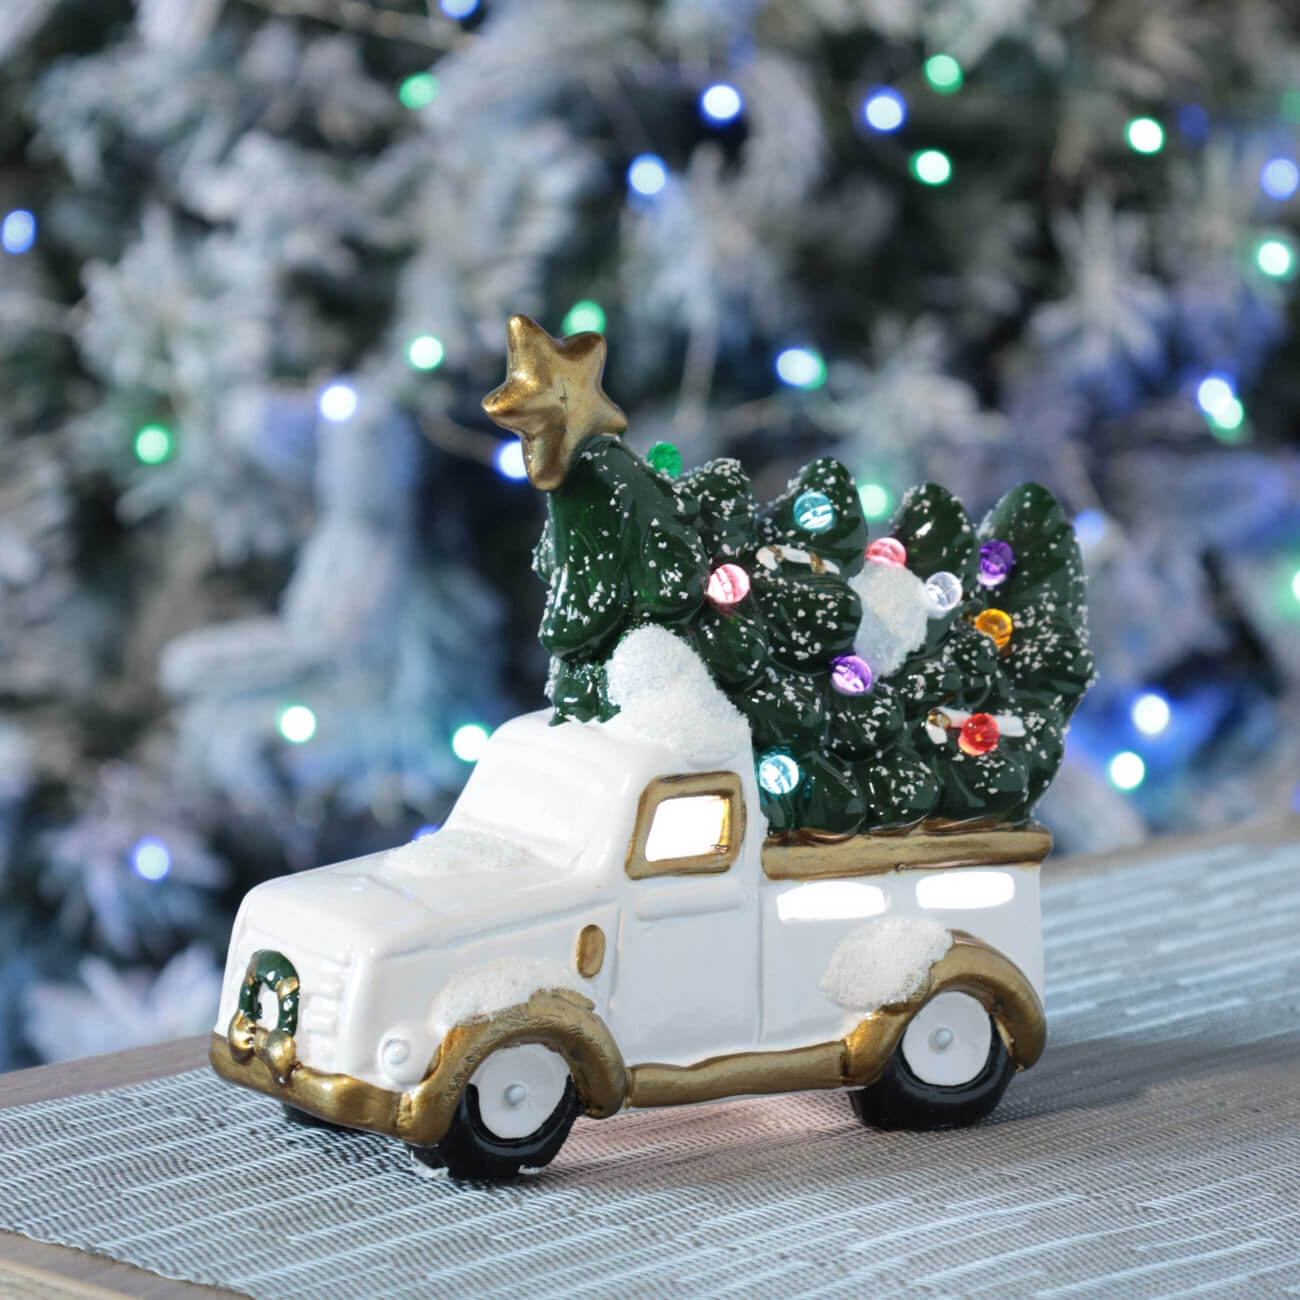 Статуэтка с подсветкой, 15 см, керамика, бело-золотистая, Машина с елкой, Christmas car - фото 1